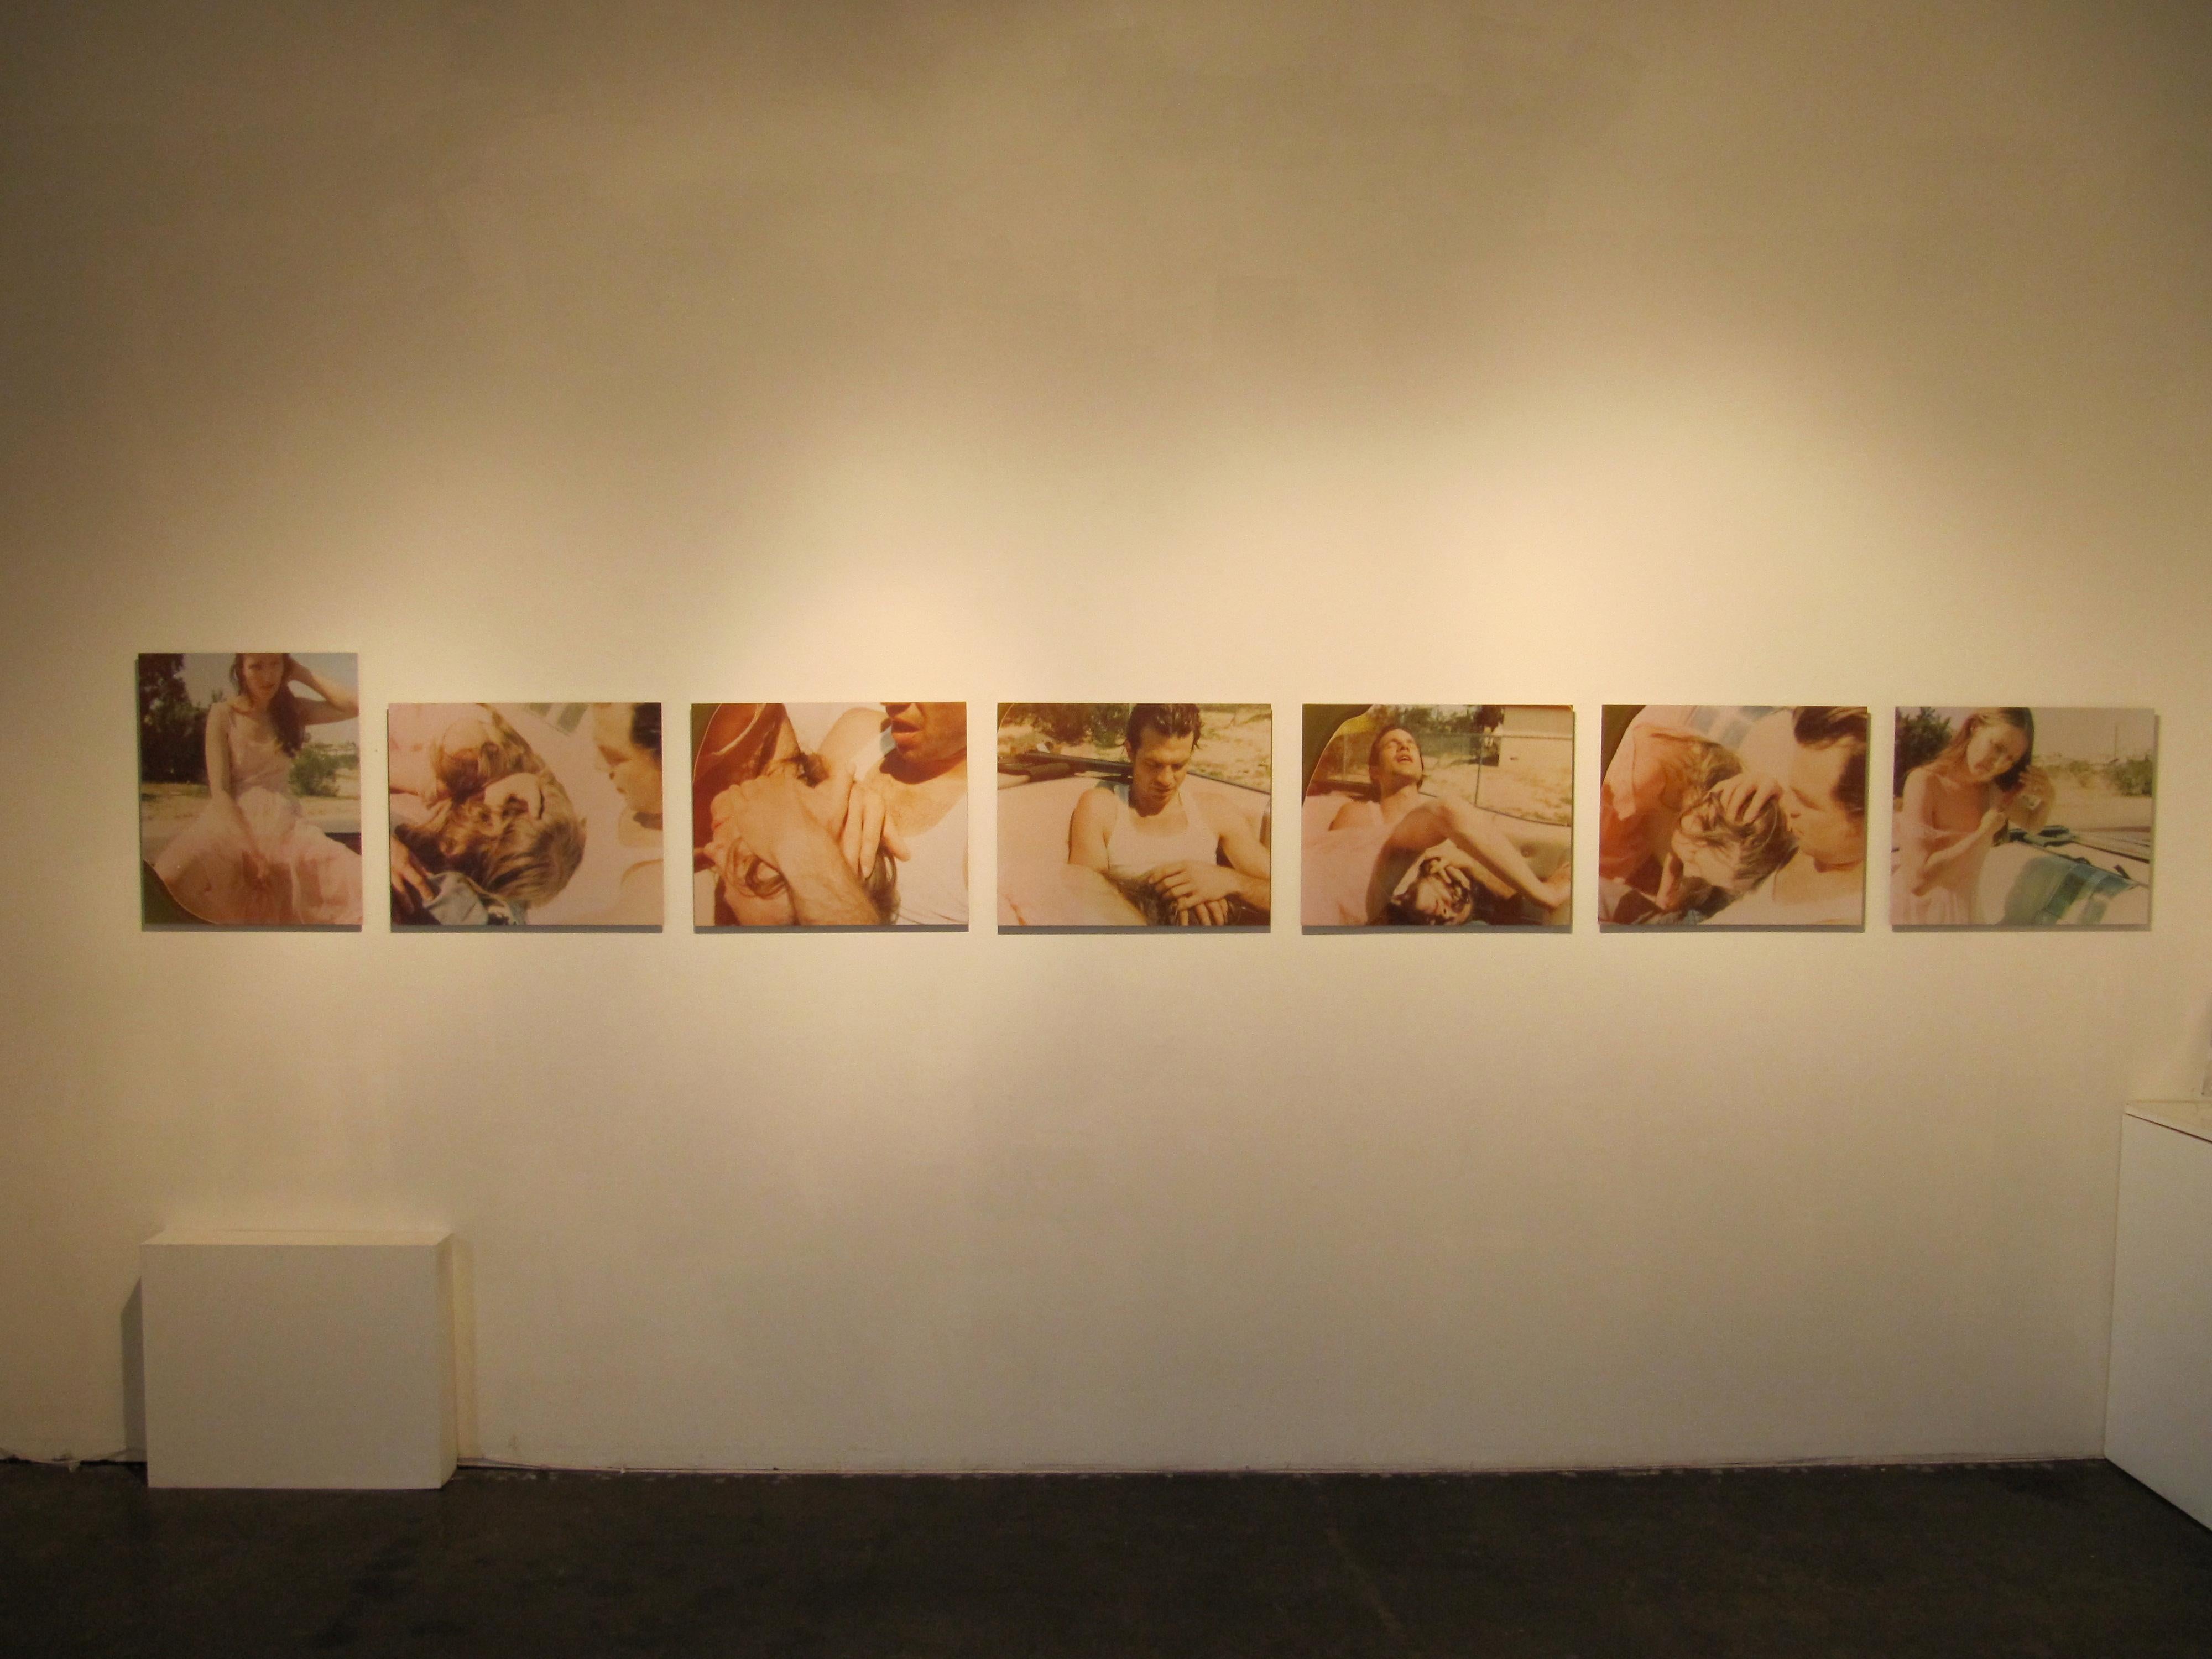 Sucking / Brushing - Sidewinder - 7 pieces based on 7 Polaroids, analog, mounted - Photograph by Stefanie Schneider